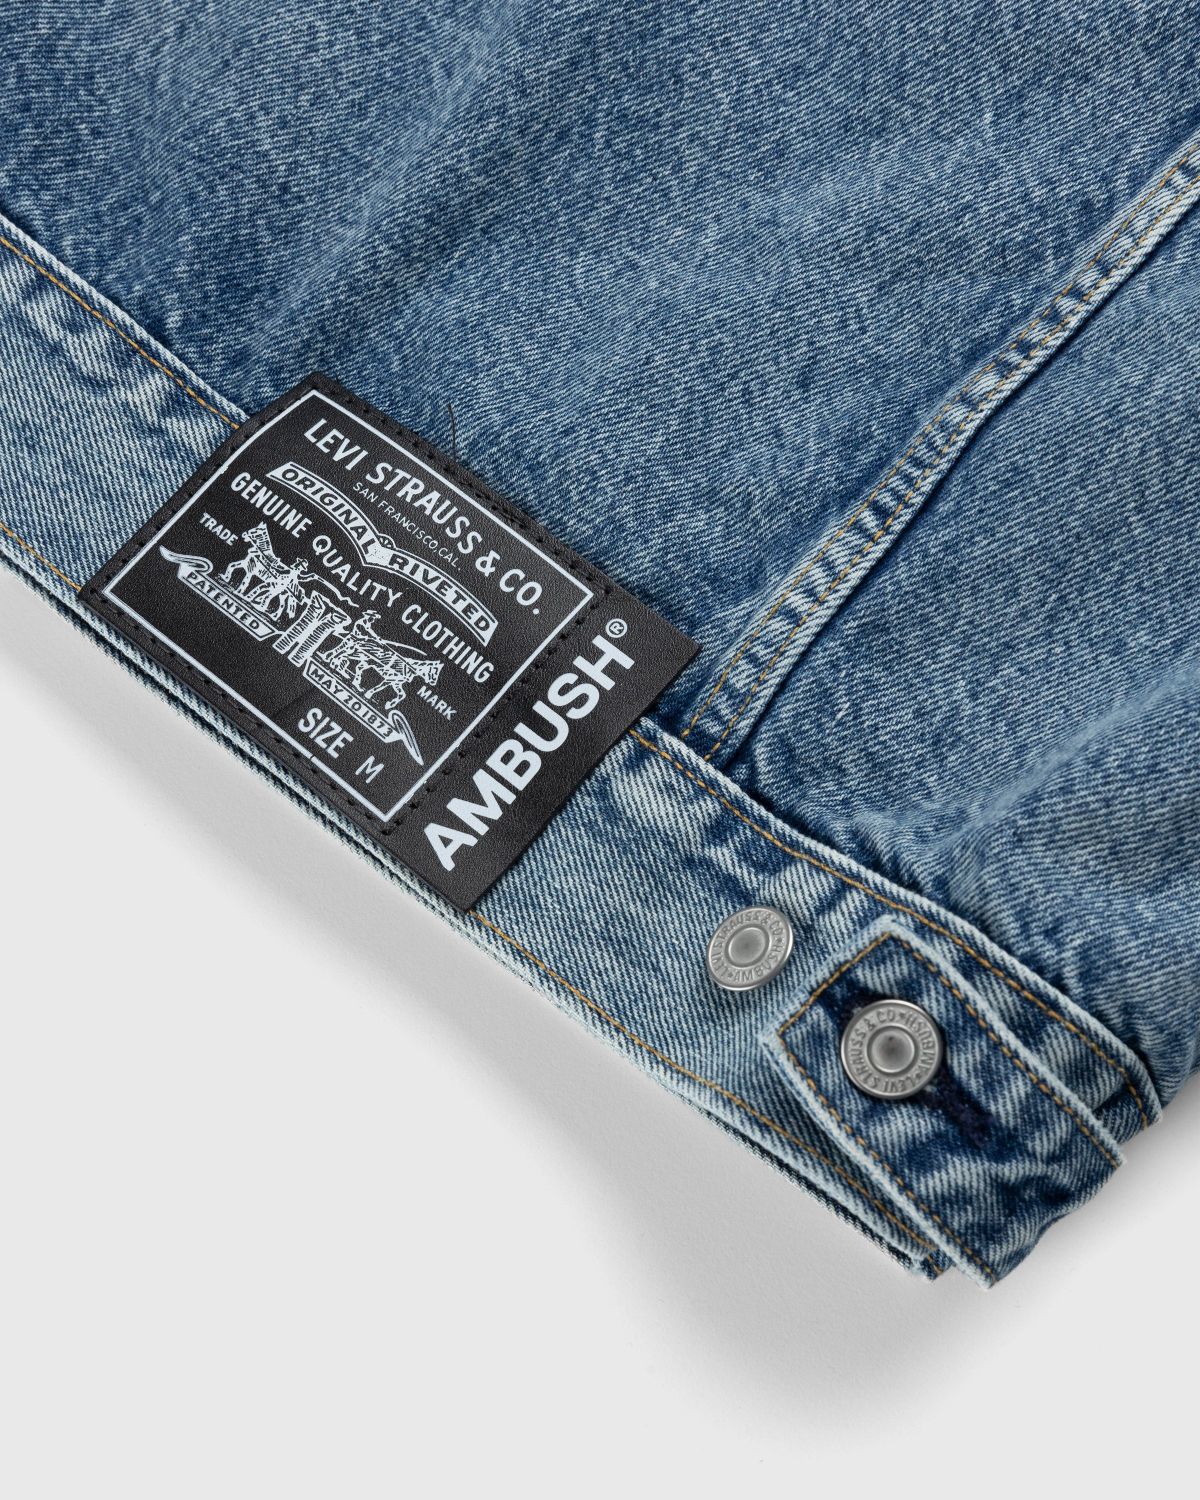 Levi's x AMBUSH – Trucker Jacket Mid Indigo - Outerwear - Blue - Image 4